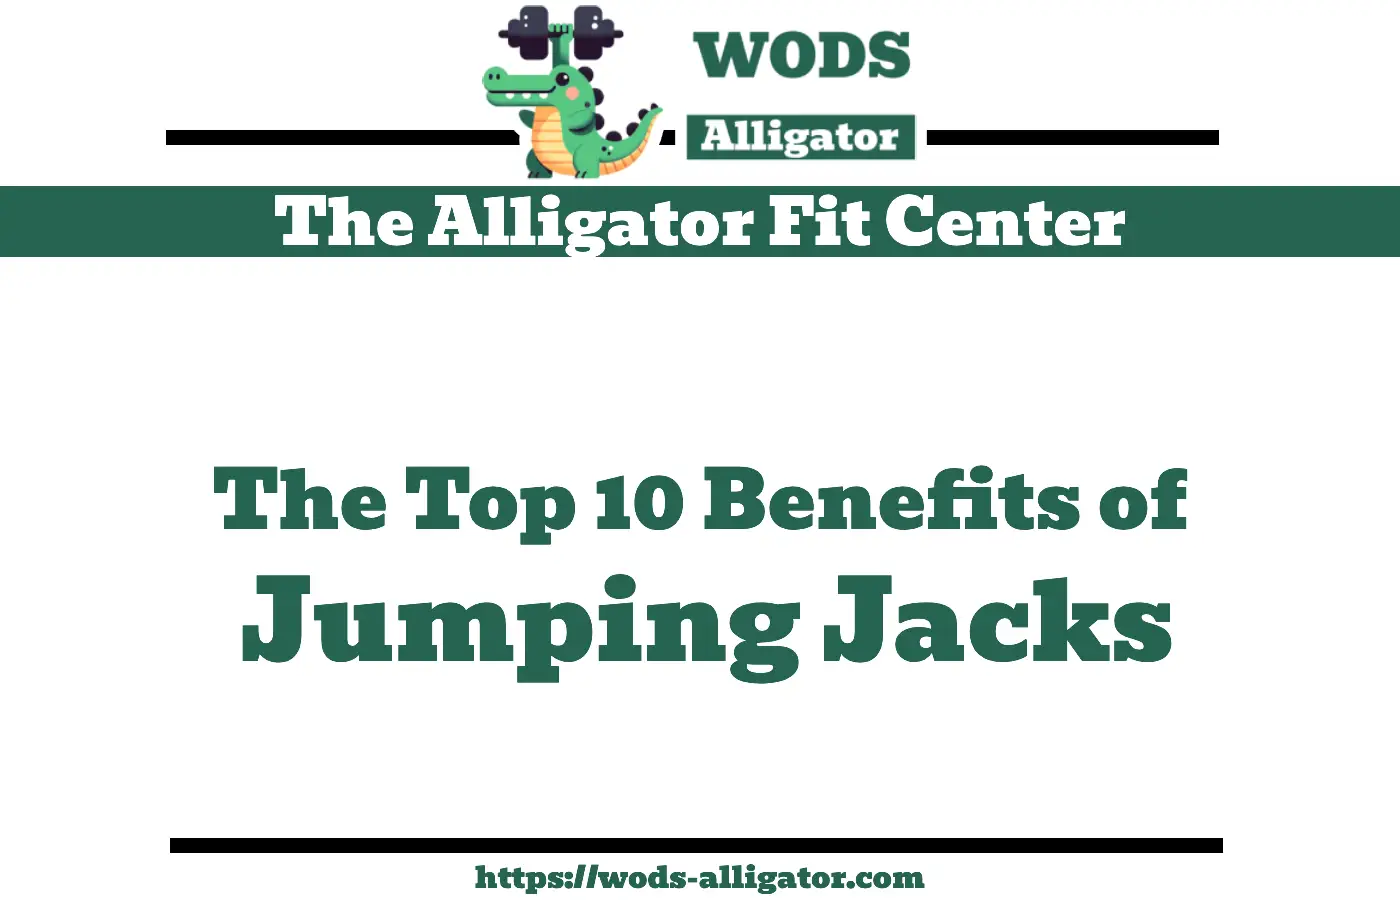 The Top 10 Benefits of Jumping Jacks header image